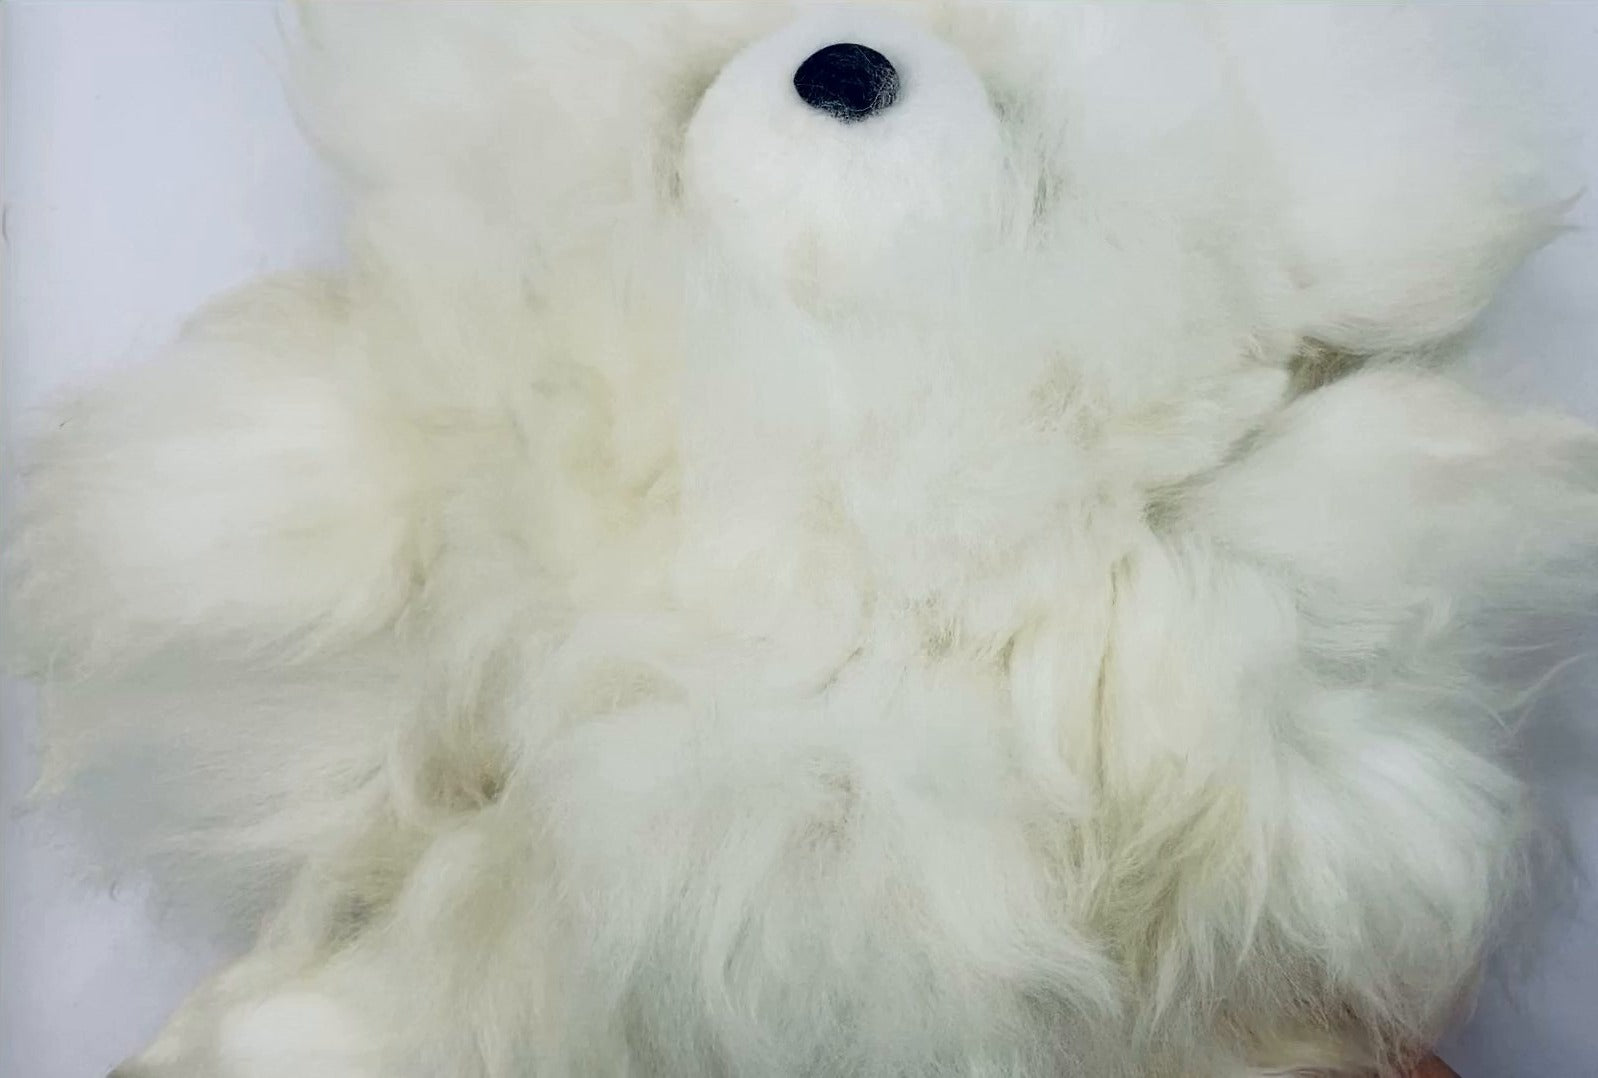 Handmade with Love: 100% Baby Alpaca Fur Stuffed Animal Bears